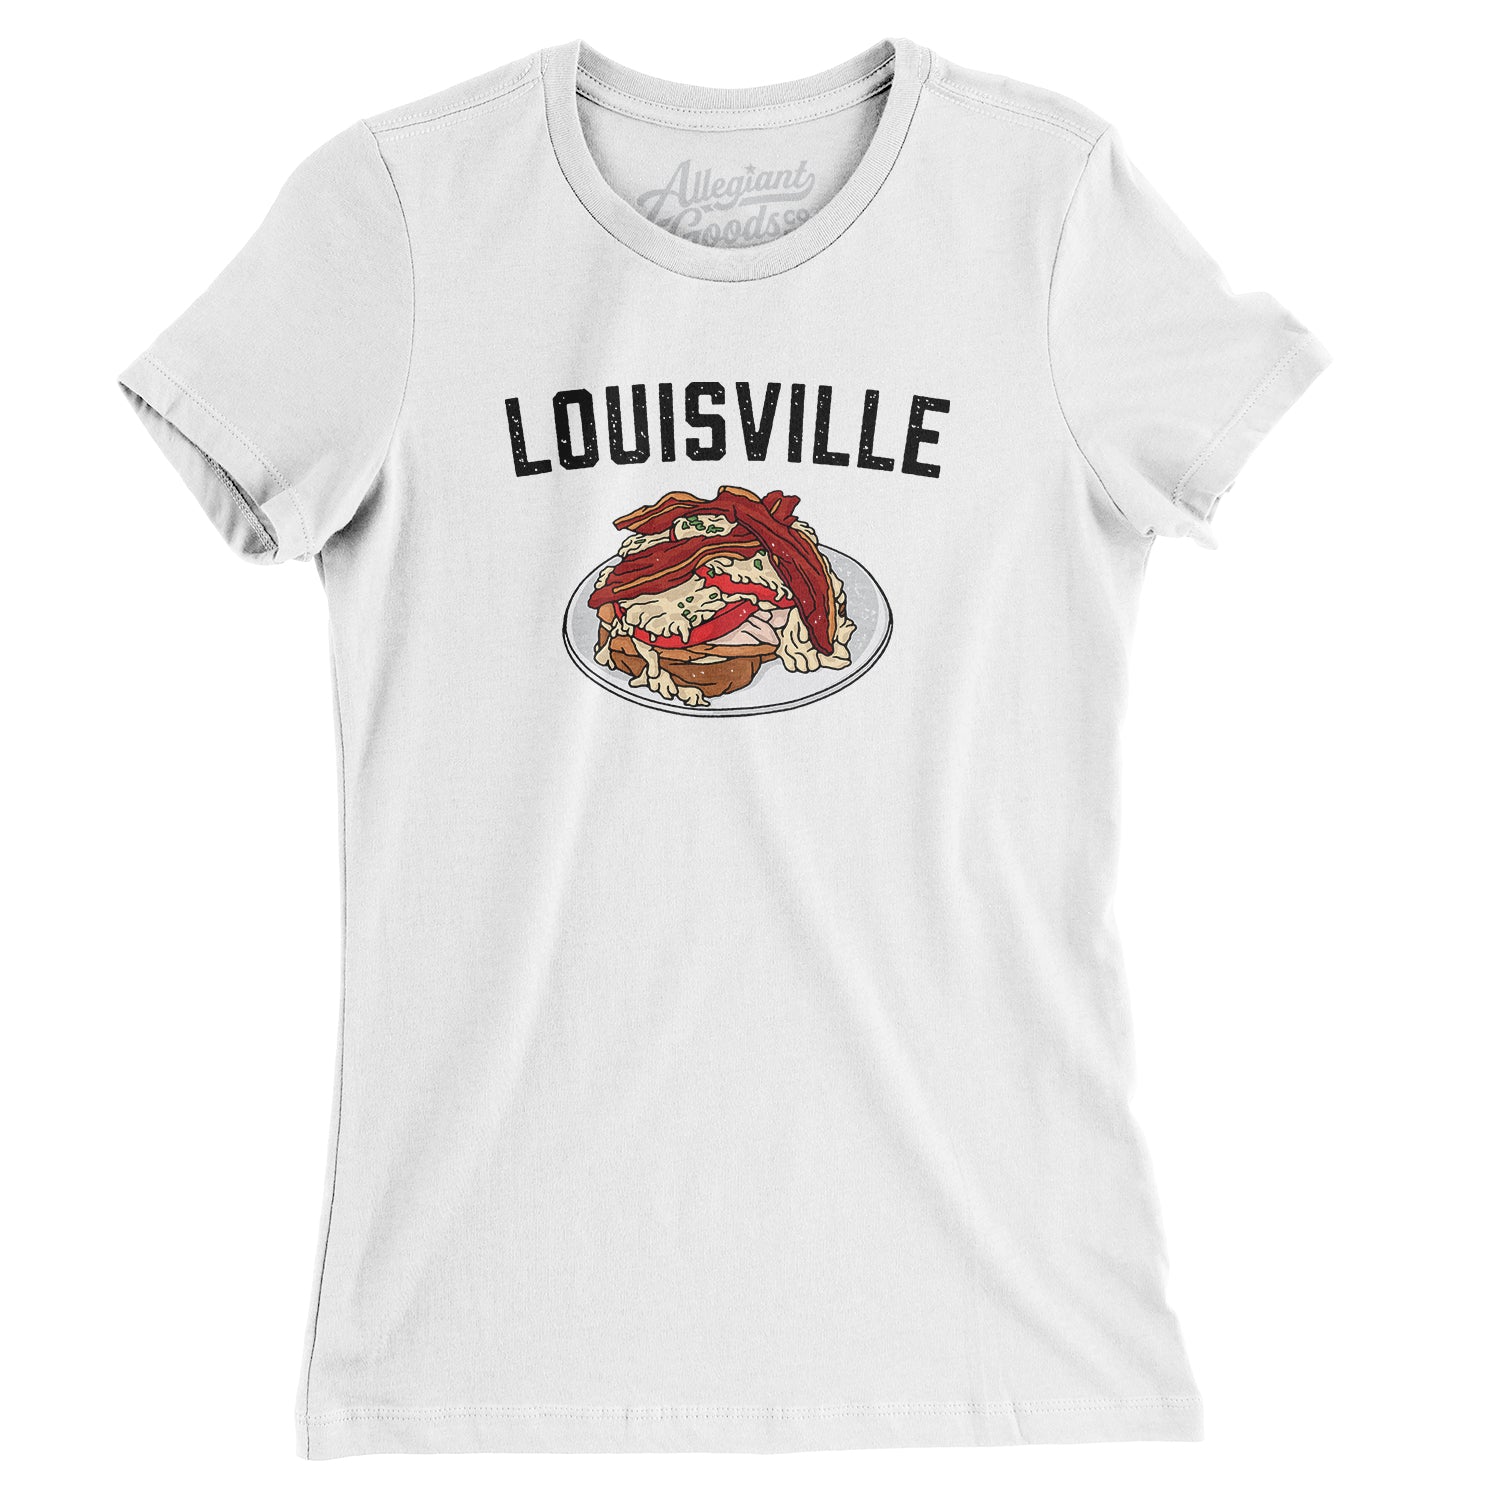 Louisville Kentucky Pride Men/Unisex T-Shirt - Allegiant Goods Co.